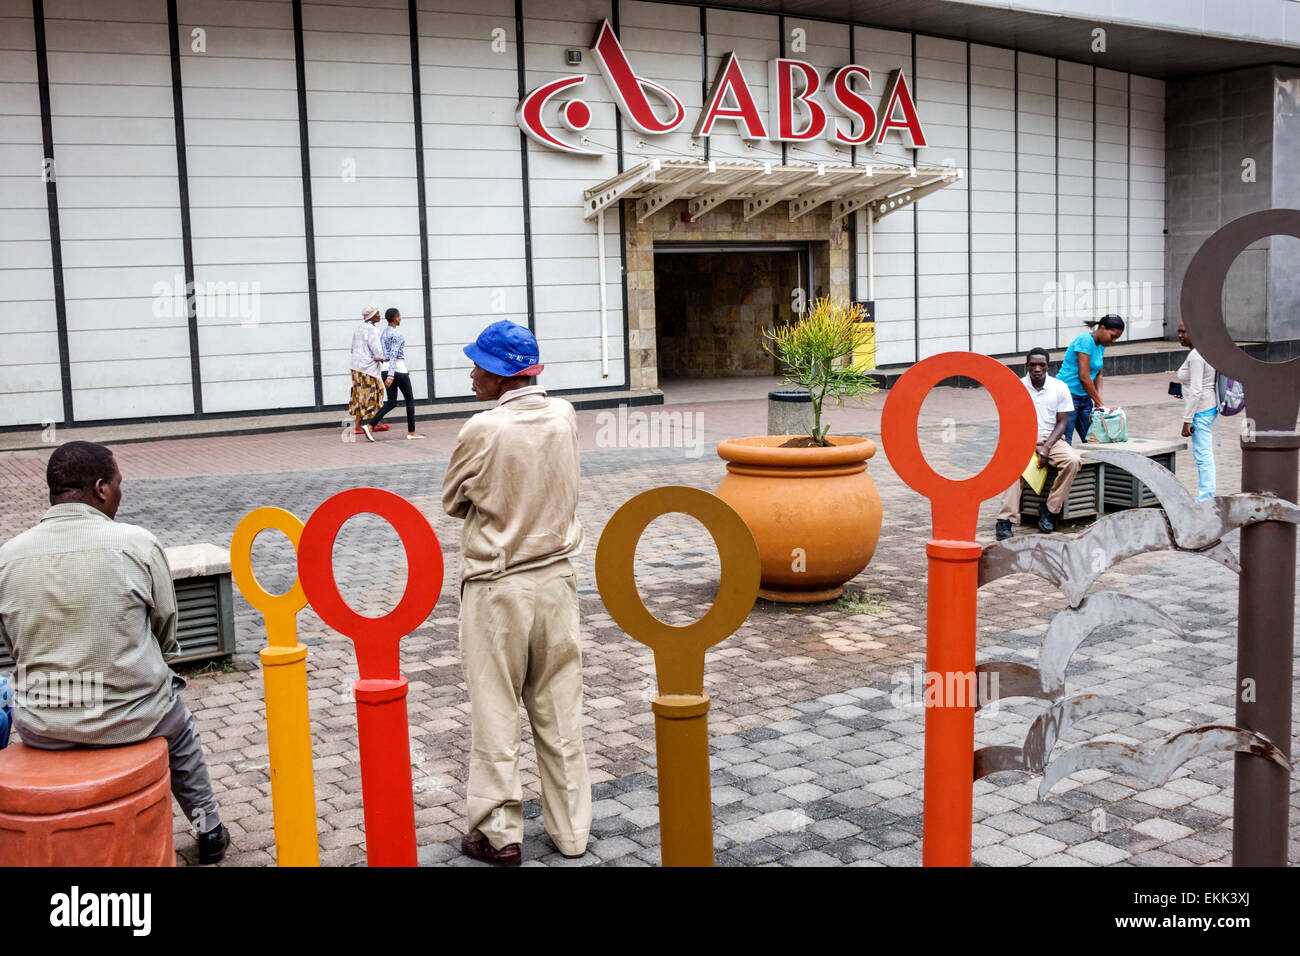 Johannesburg South Africa,Gandhi Square,Black man men male,art,sculpture,ABSA,SAfri150307010 Stock Photo